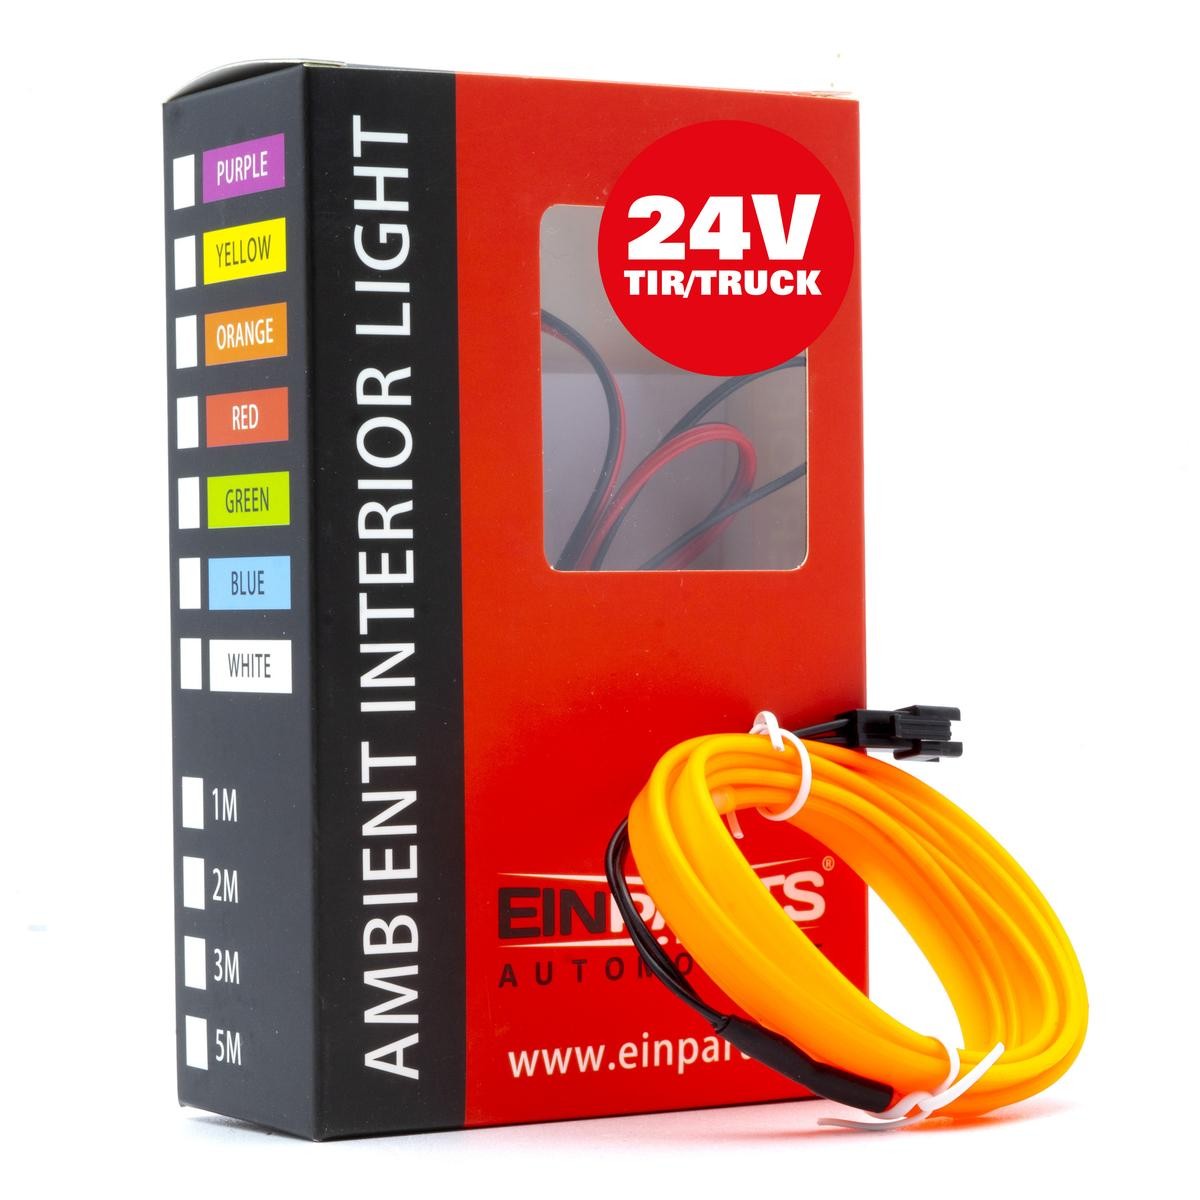 EINPARTS Interior Light EPAL1M ORANGE 24V buy